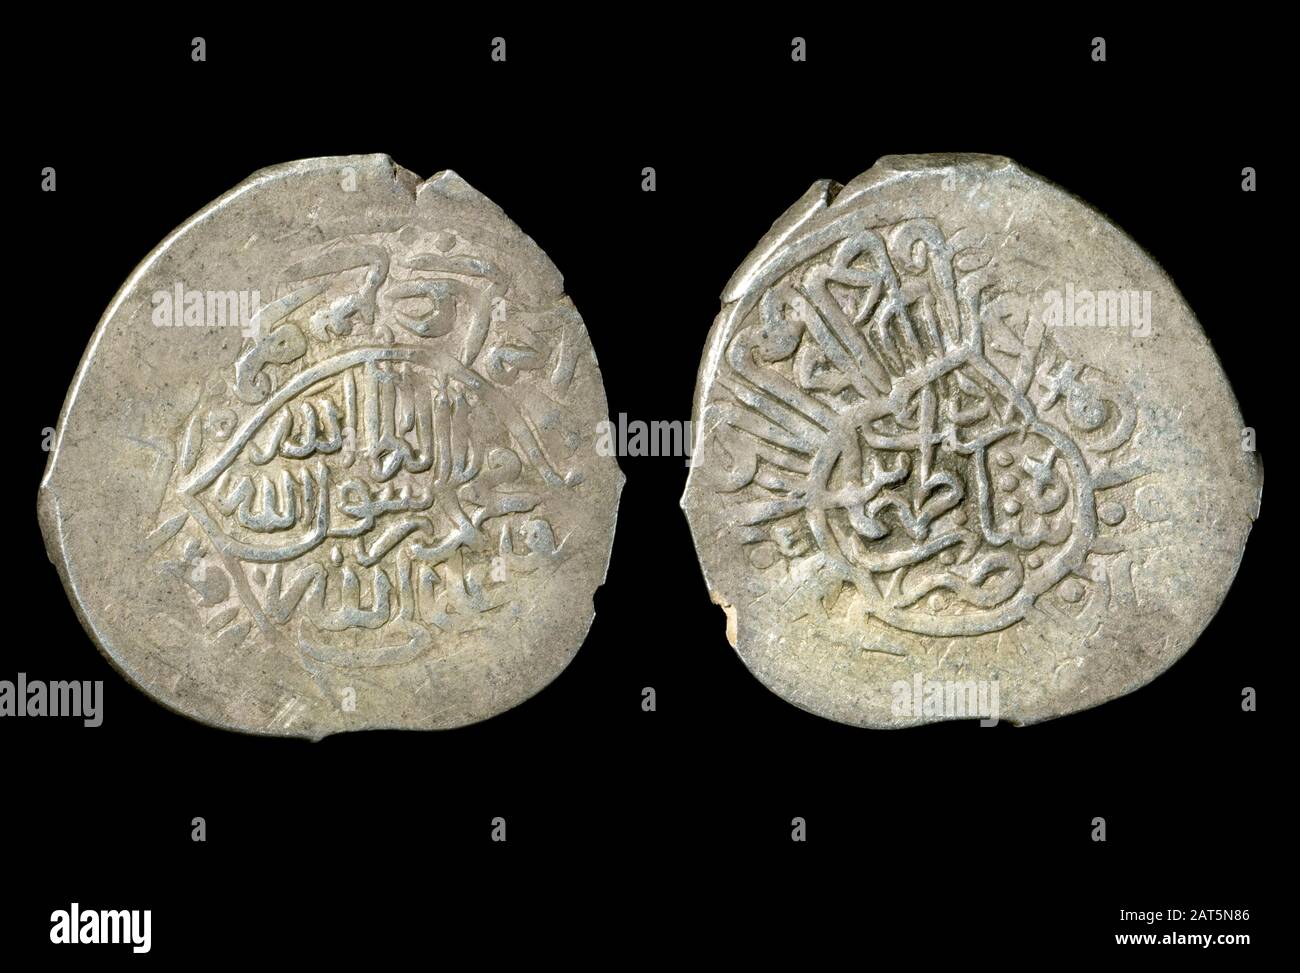 Moneta Safavid di Tahmasp I. Foto Stock